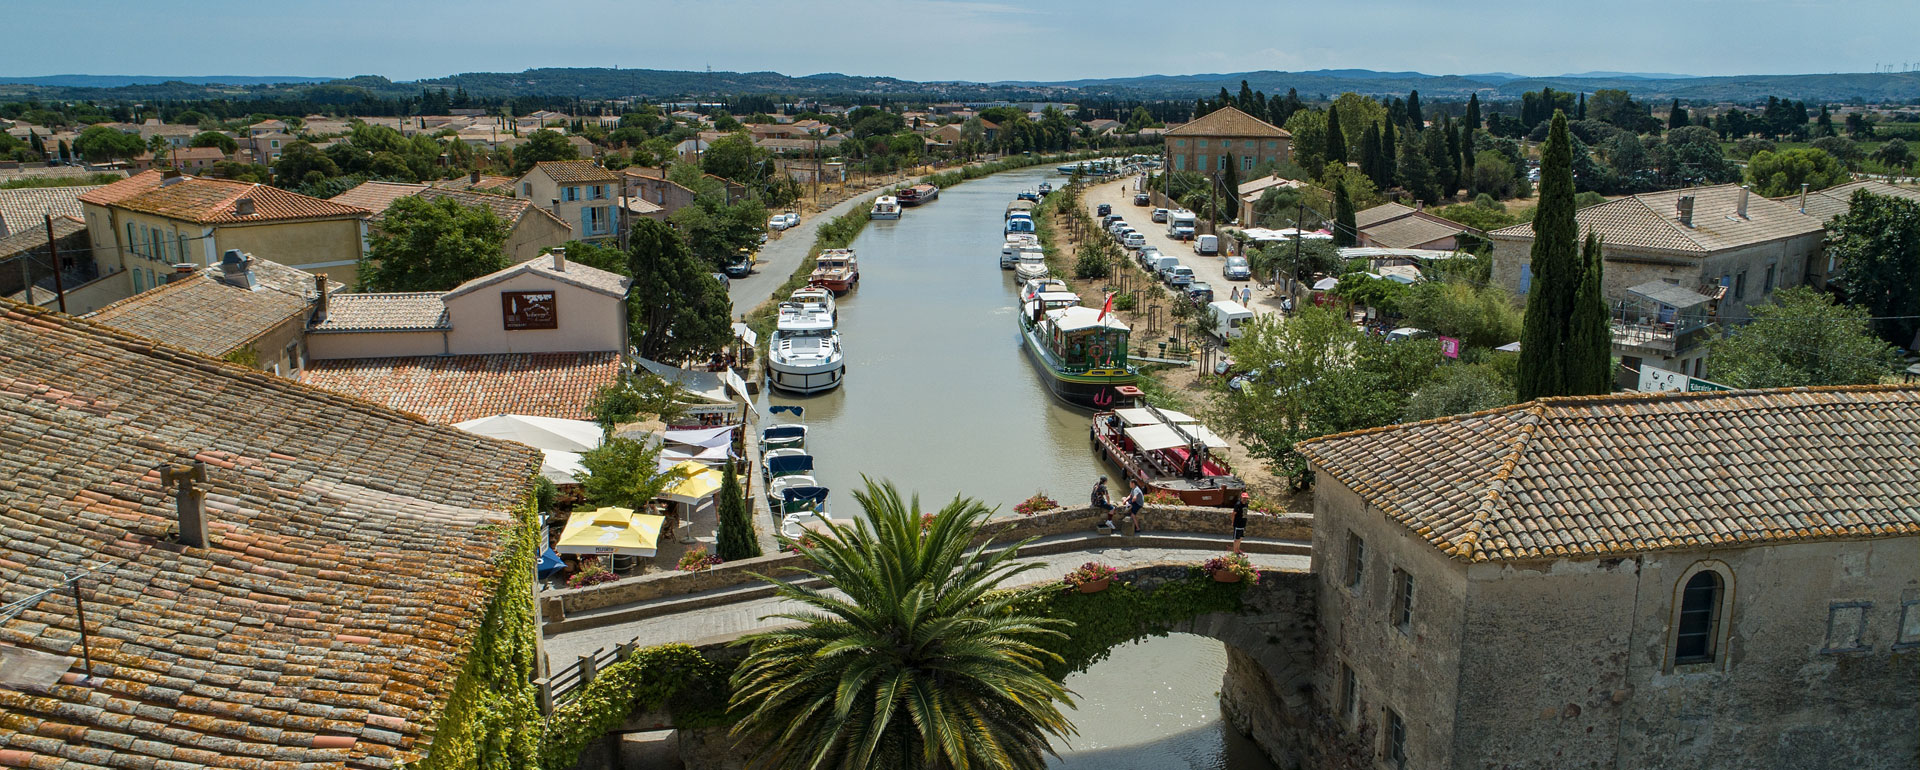 Le Somail - Canal du Midi